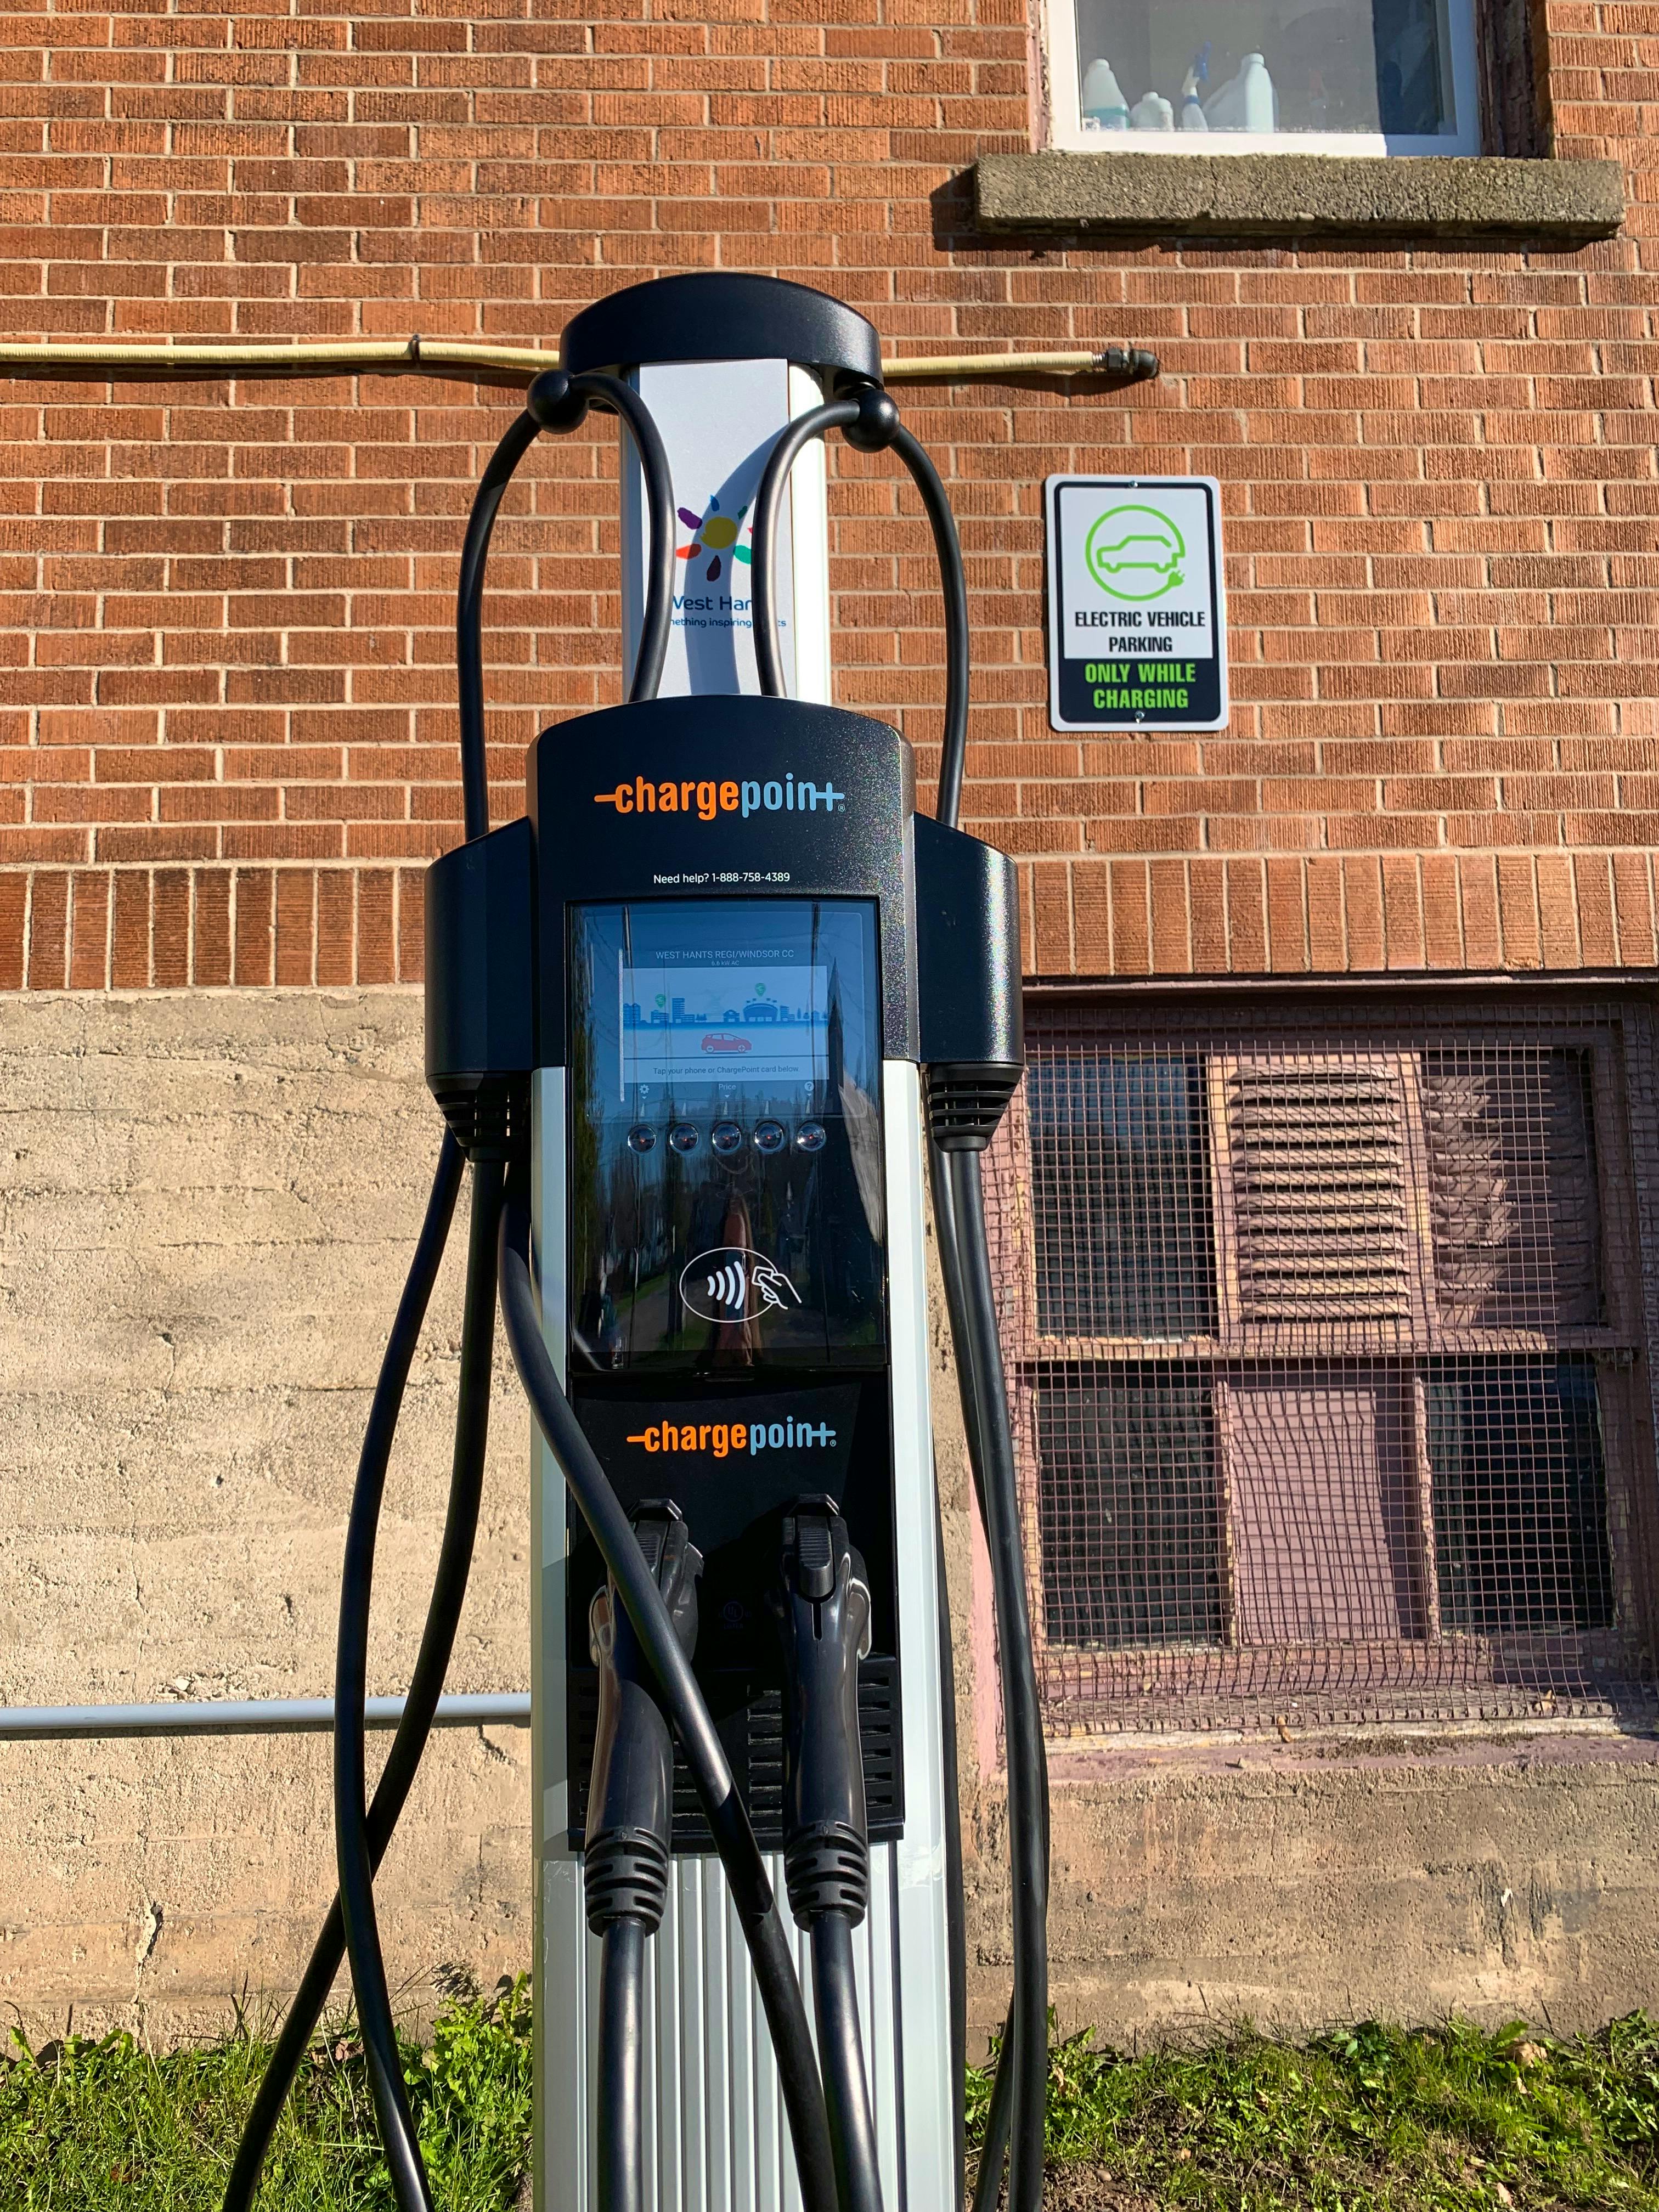 Coshocton installs EV charging stations